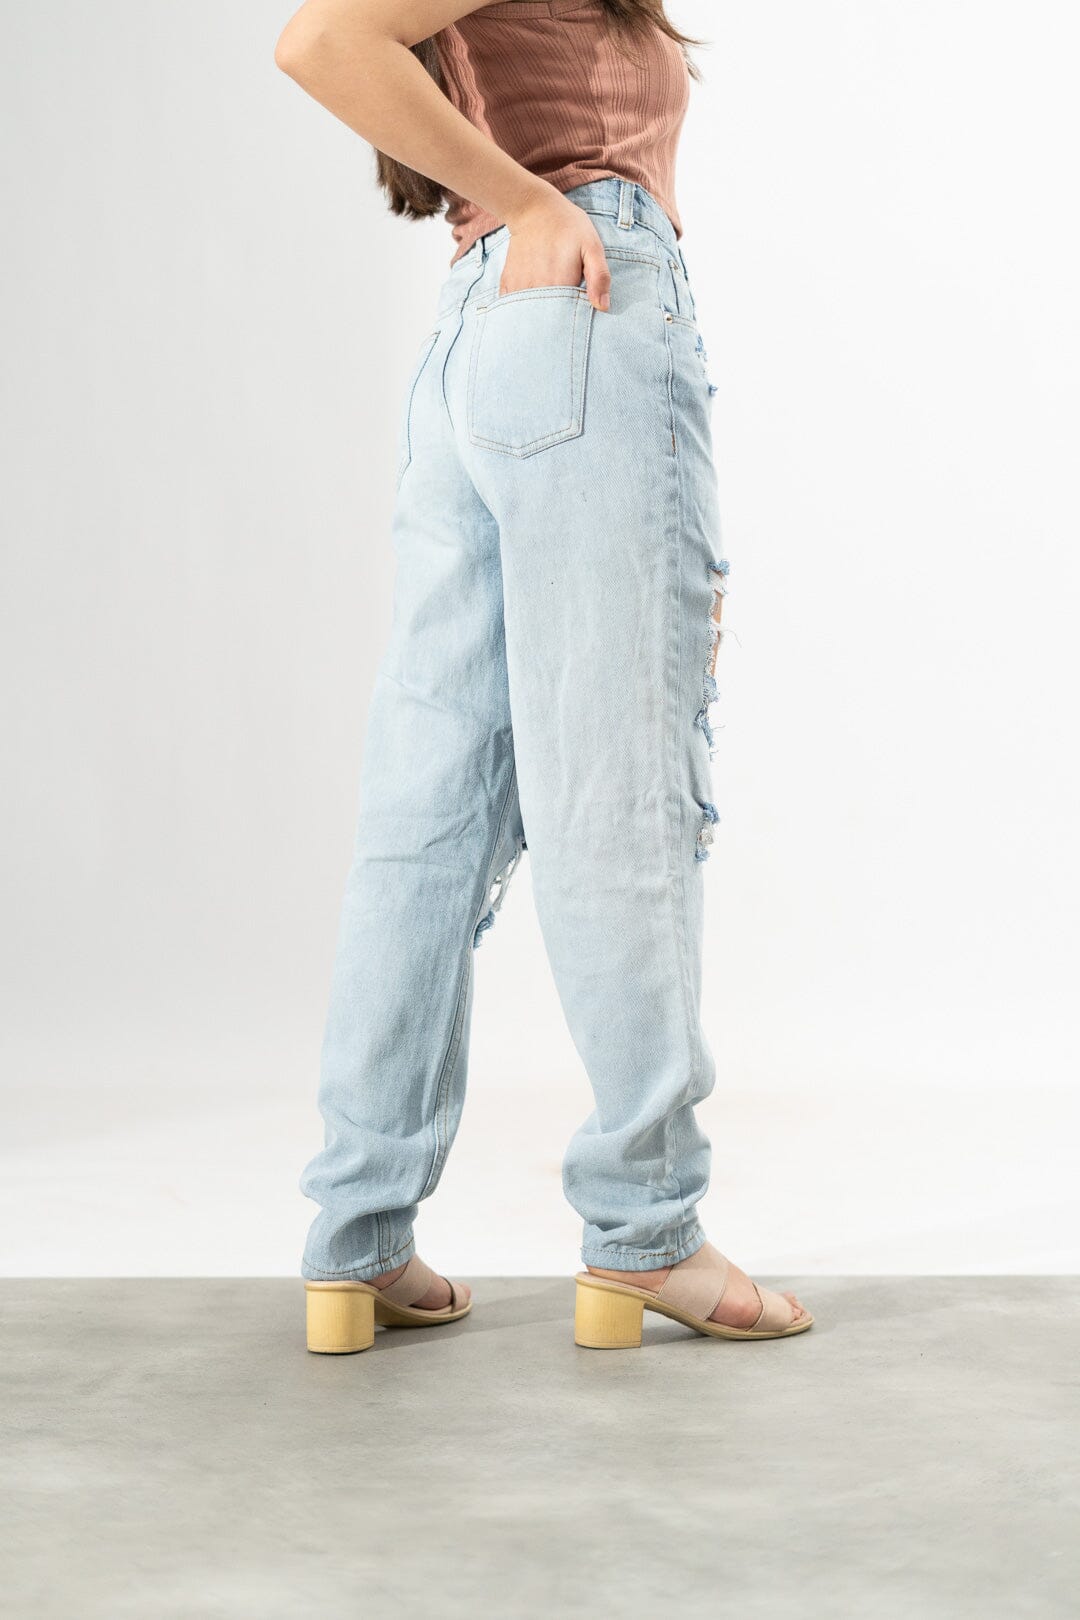 PLT Women's Distressed Classic Minor Fault Jeans Women's Denim HAS Apparel 